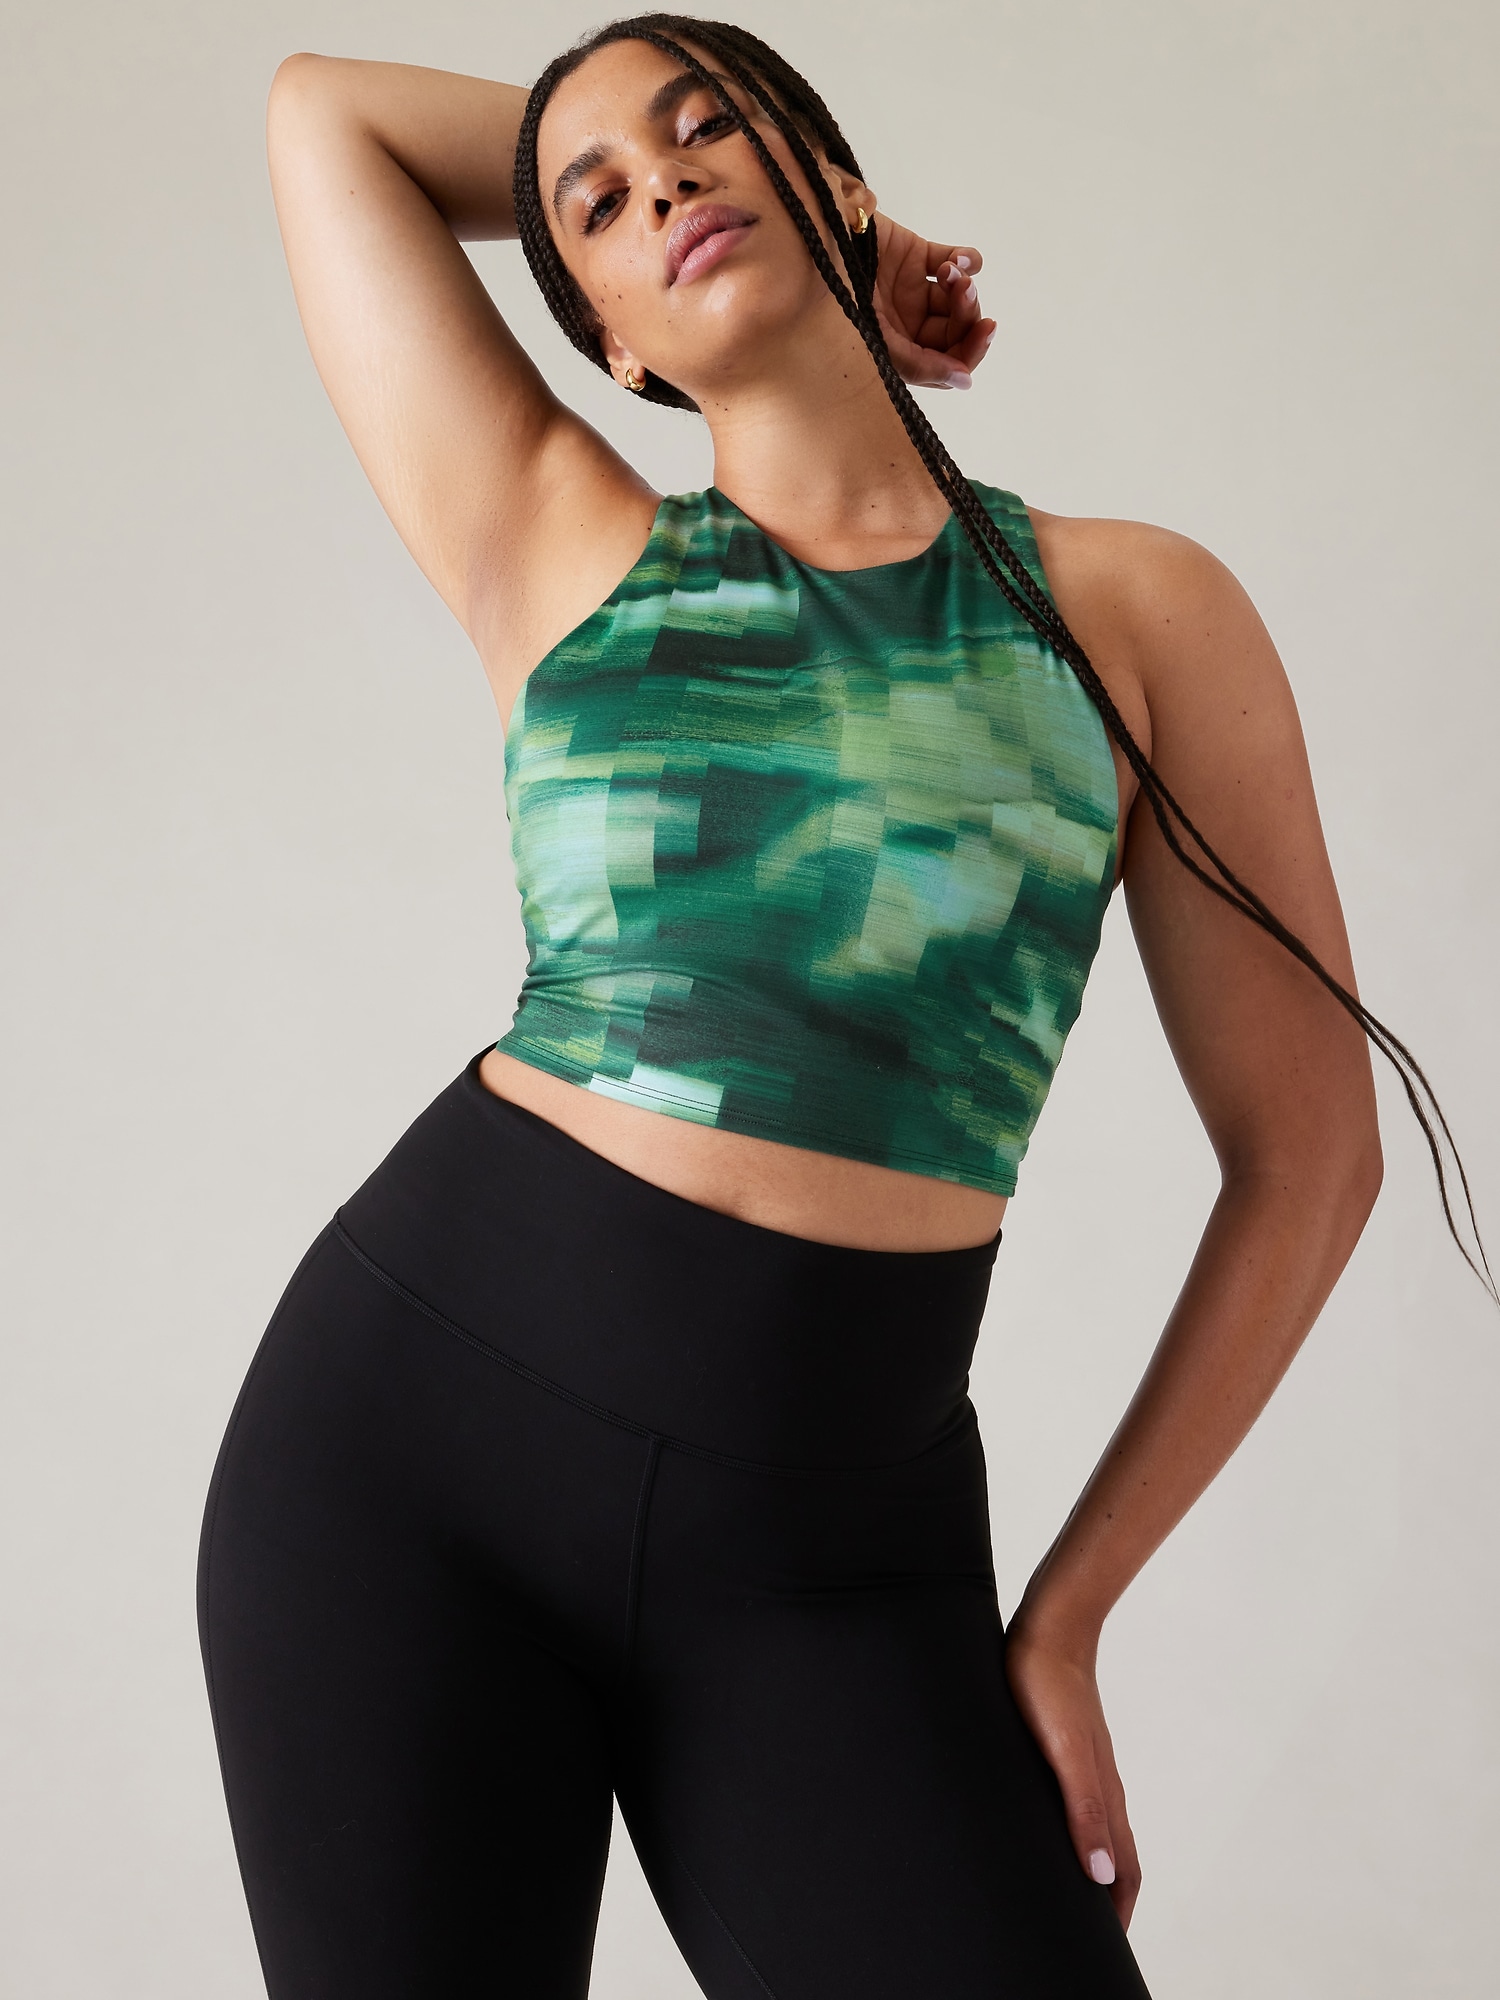 Buy ayushicreationa Women's Cami Top Crop Bra for Fashion Yoga